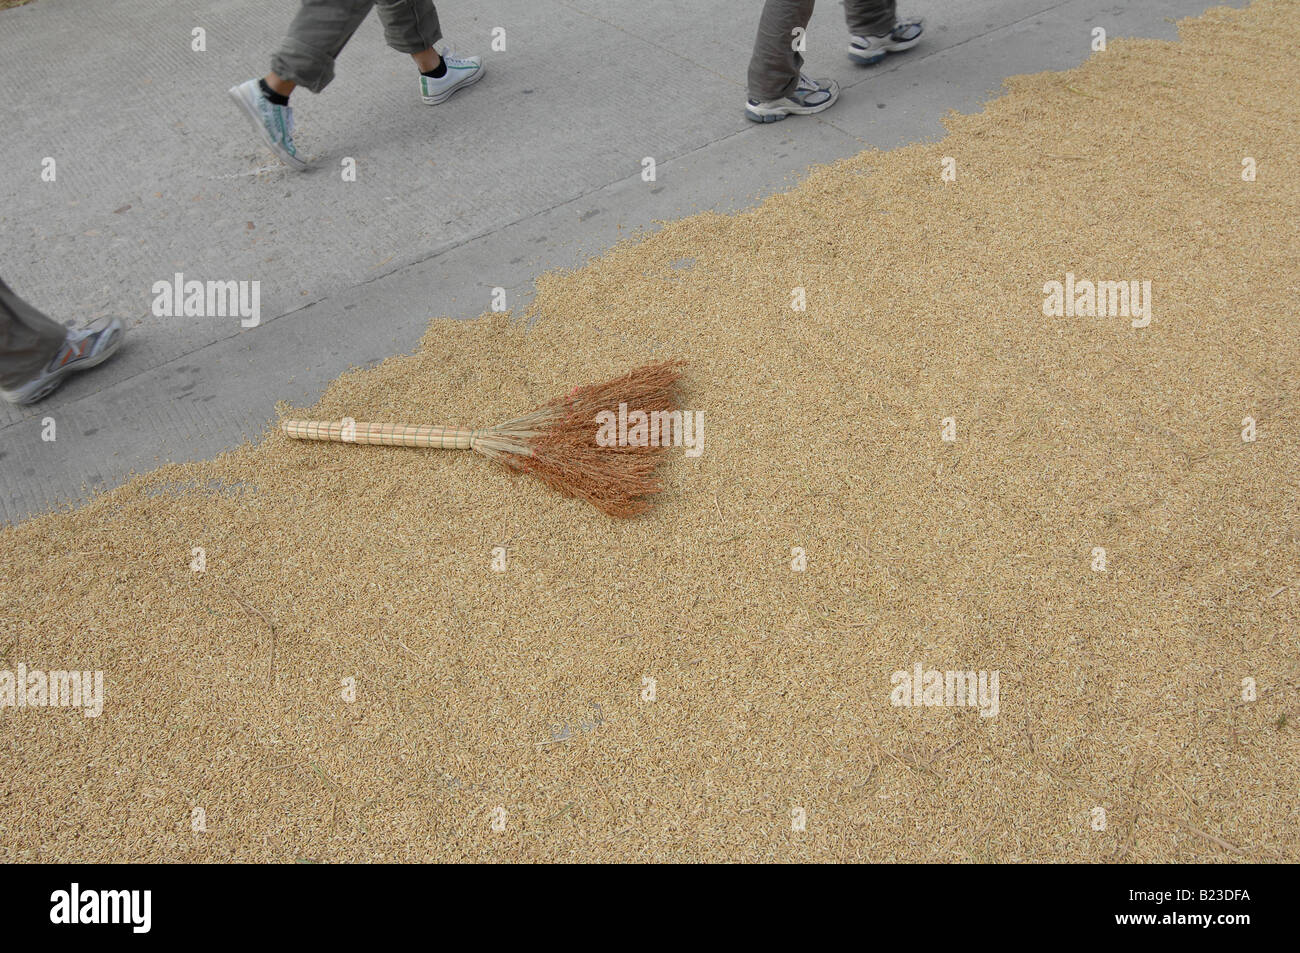 Broom on rice grains, Chengdu, Sichuan Province, China Stock Photo